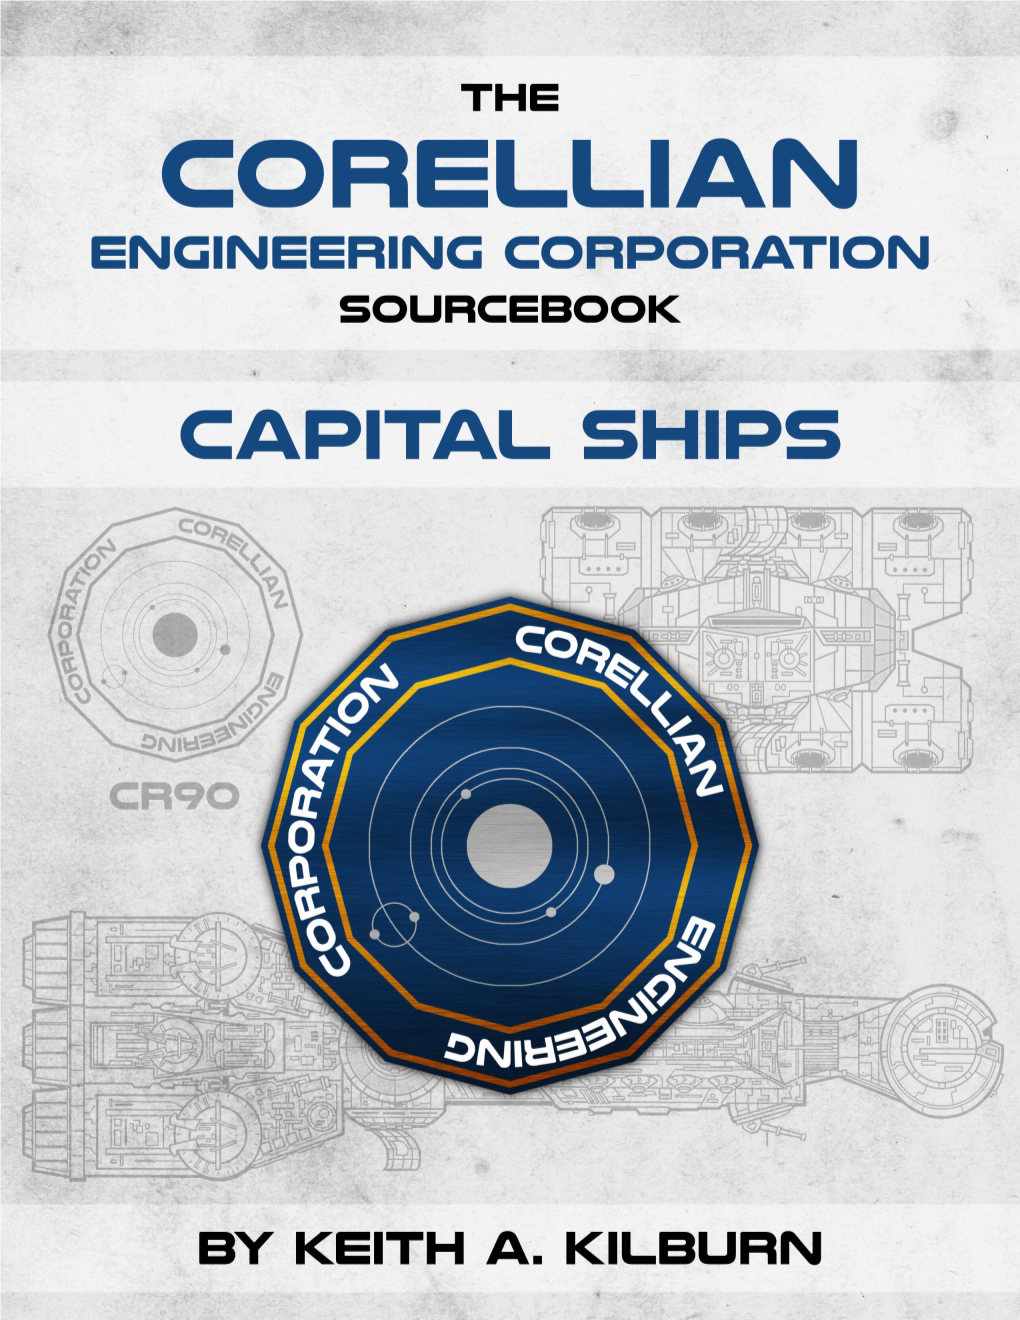 The Corellian Engineering Corporation CAPITAL SHIPS Sourcebook